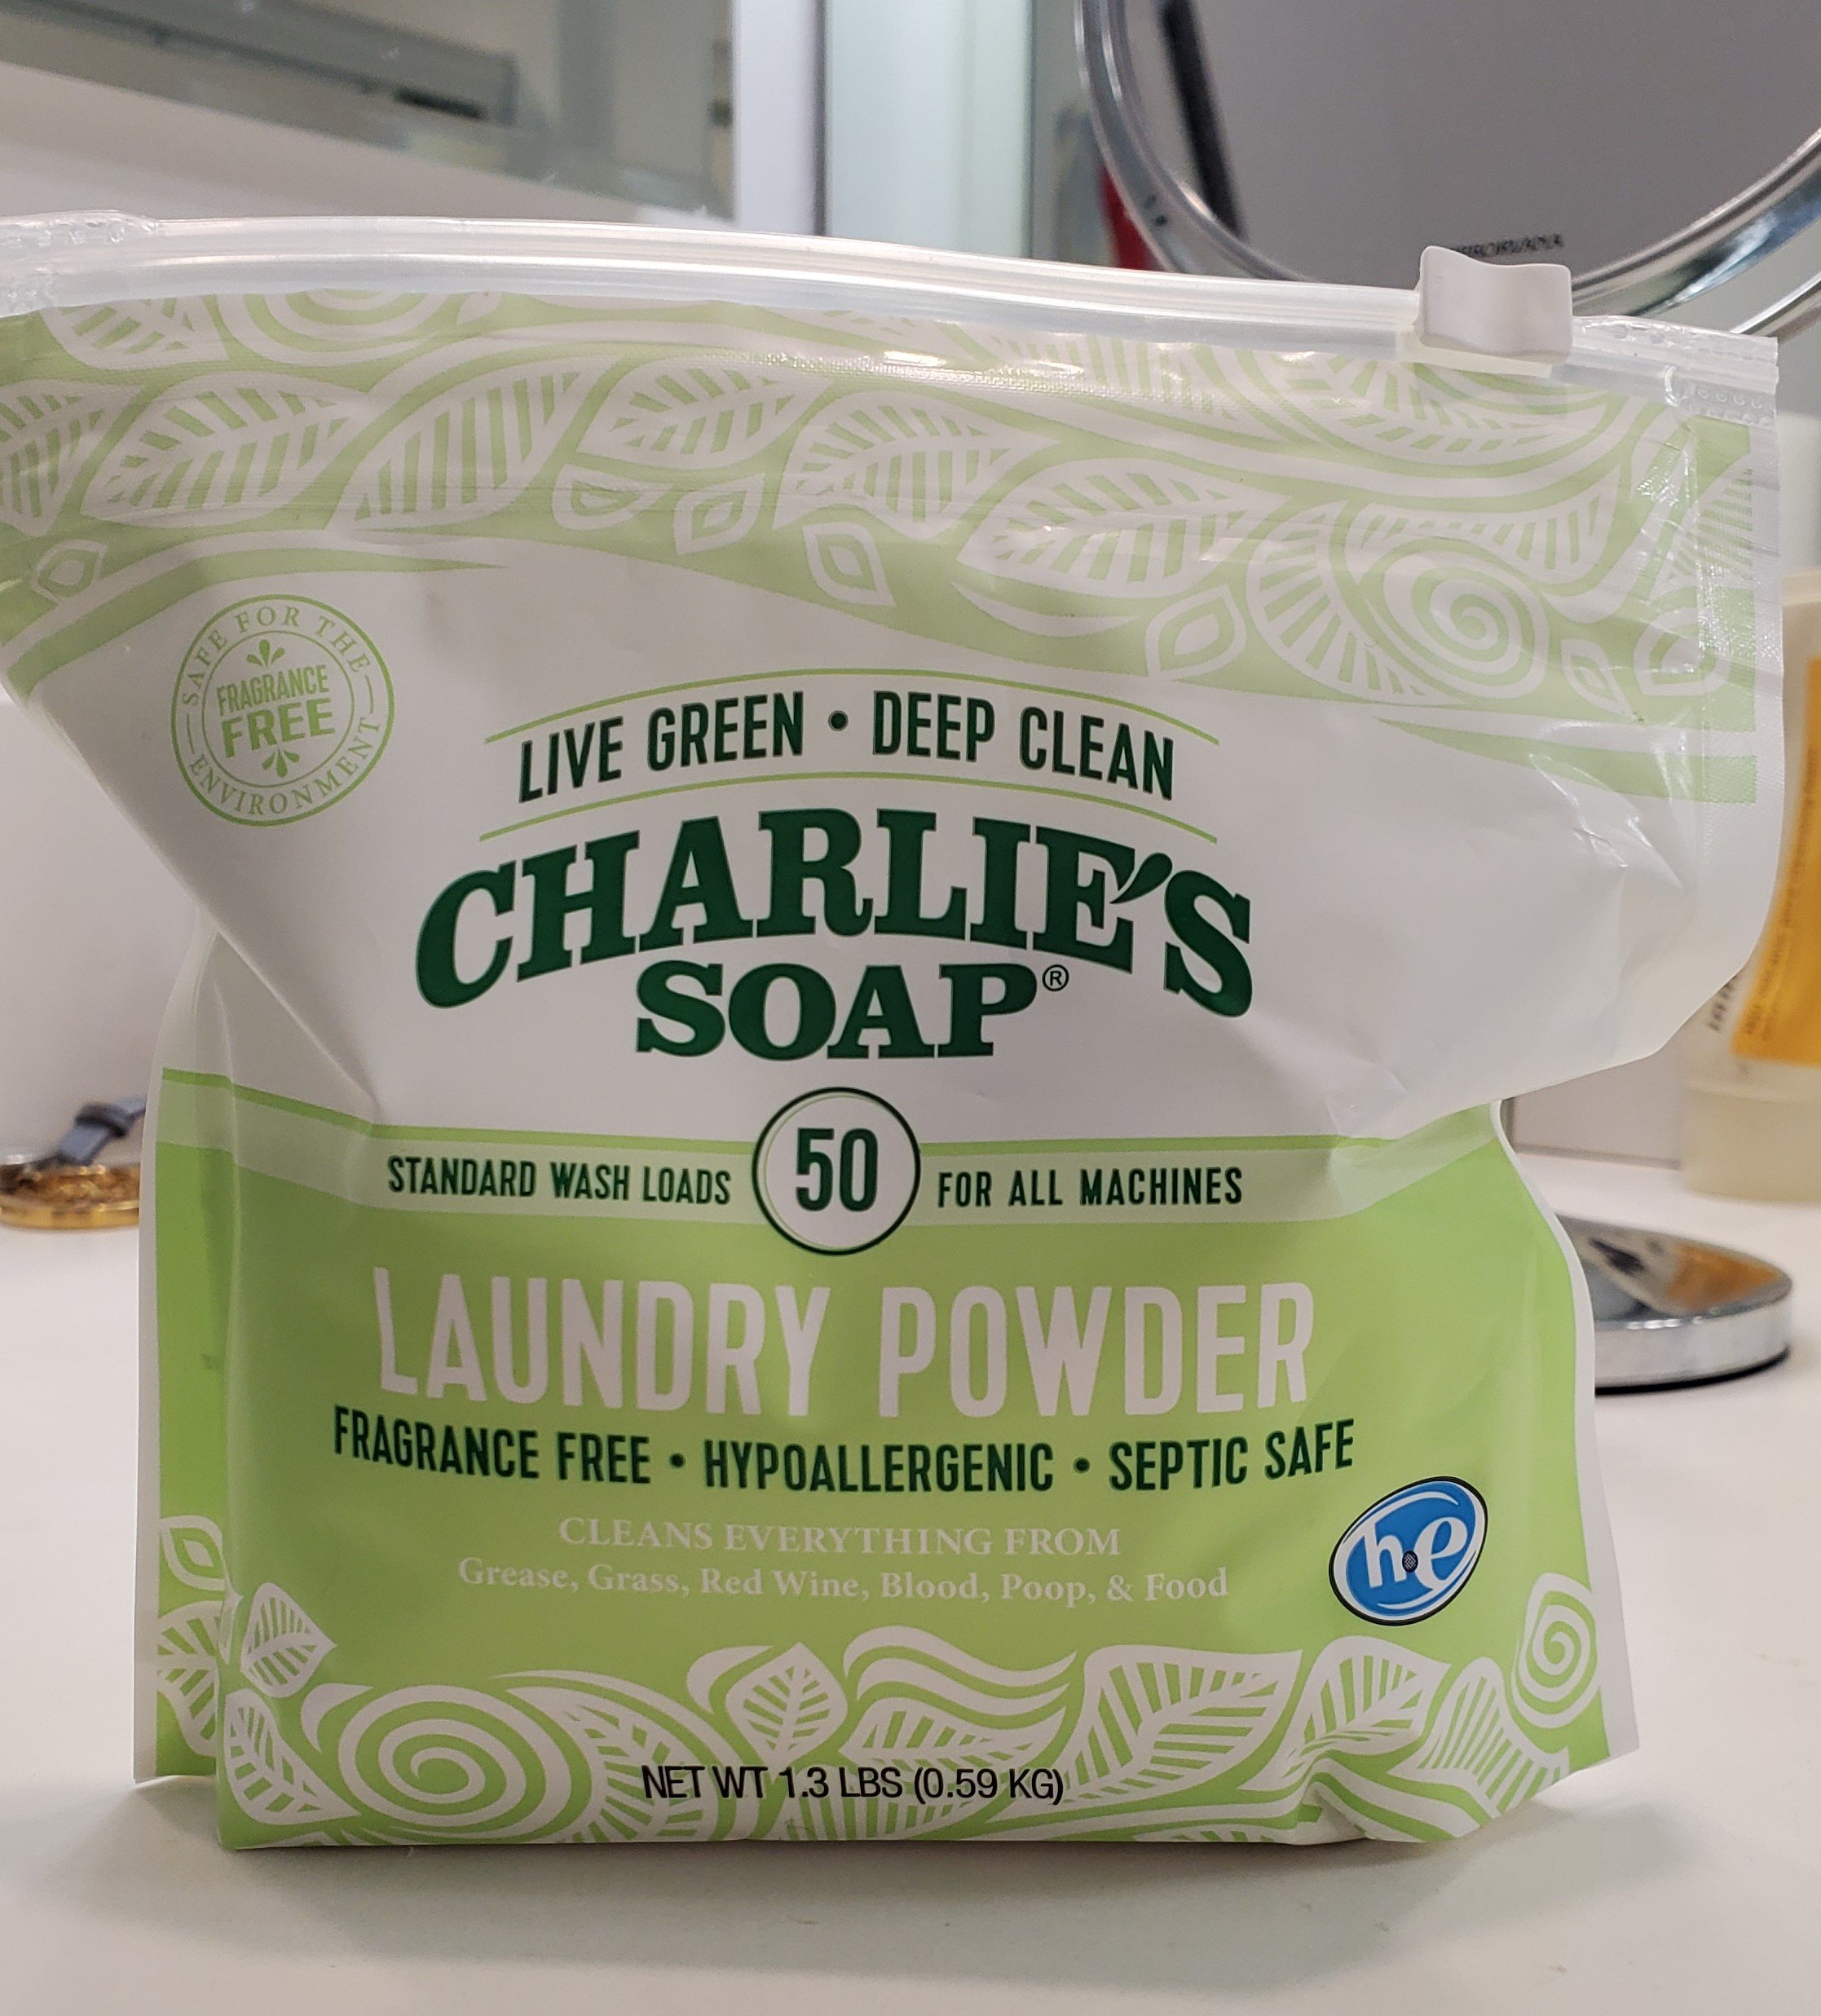 charlies soap laundry powder review 3.jpg